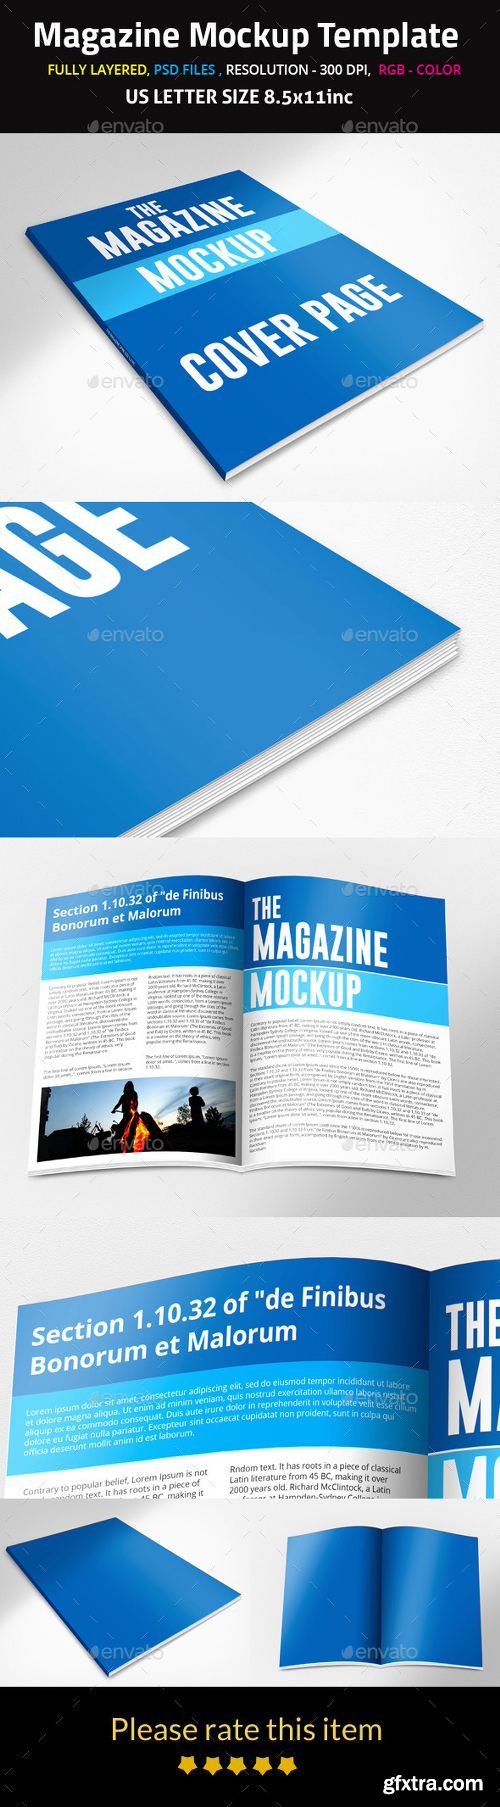 Graphicriver - Magazine Mockup Template 8608381